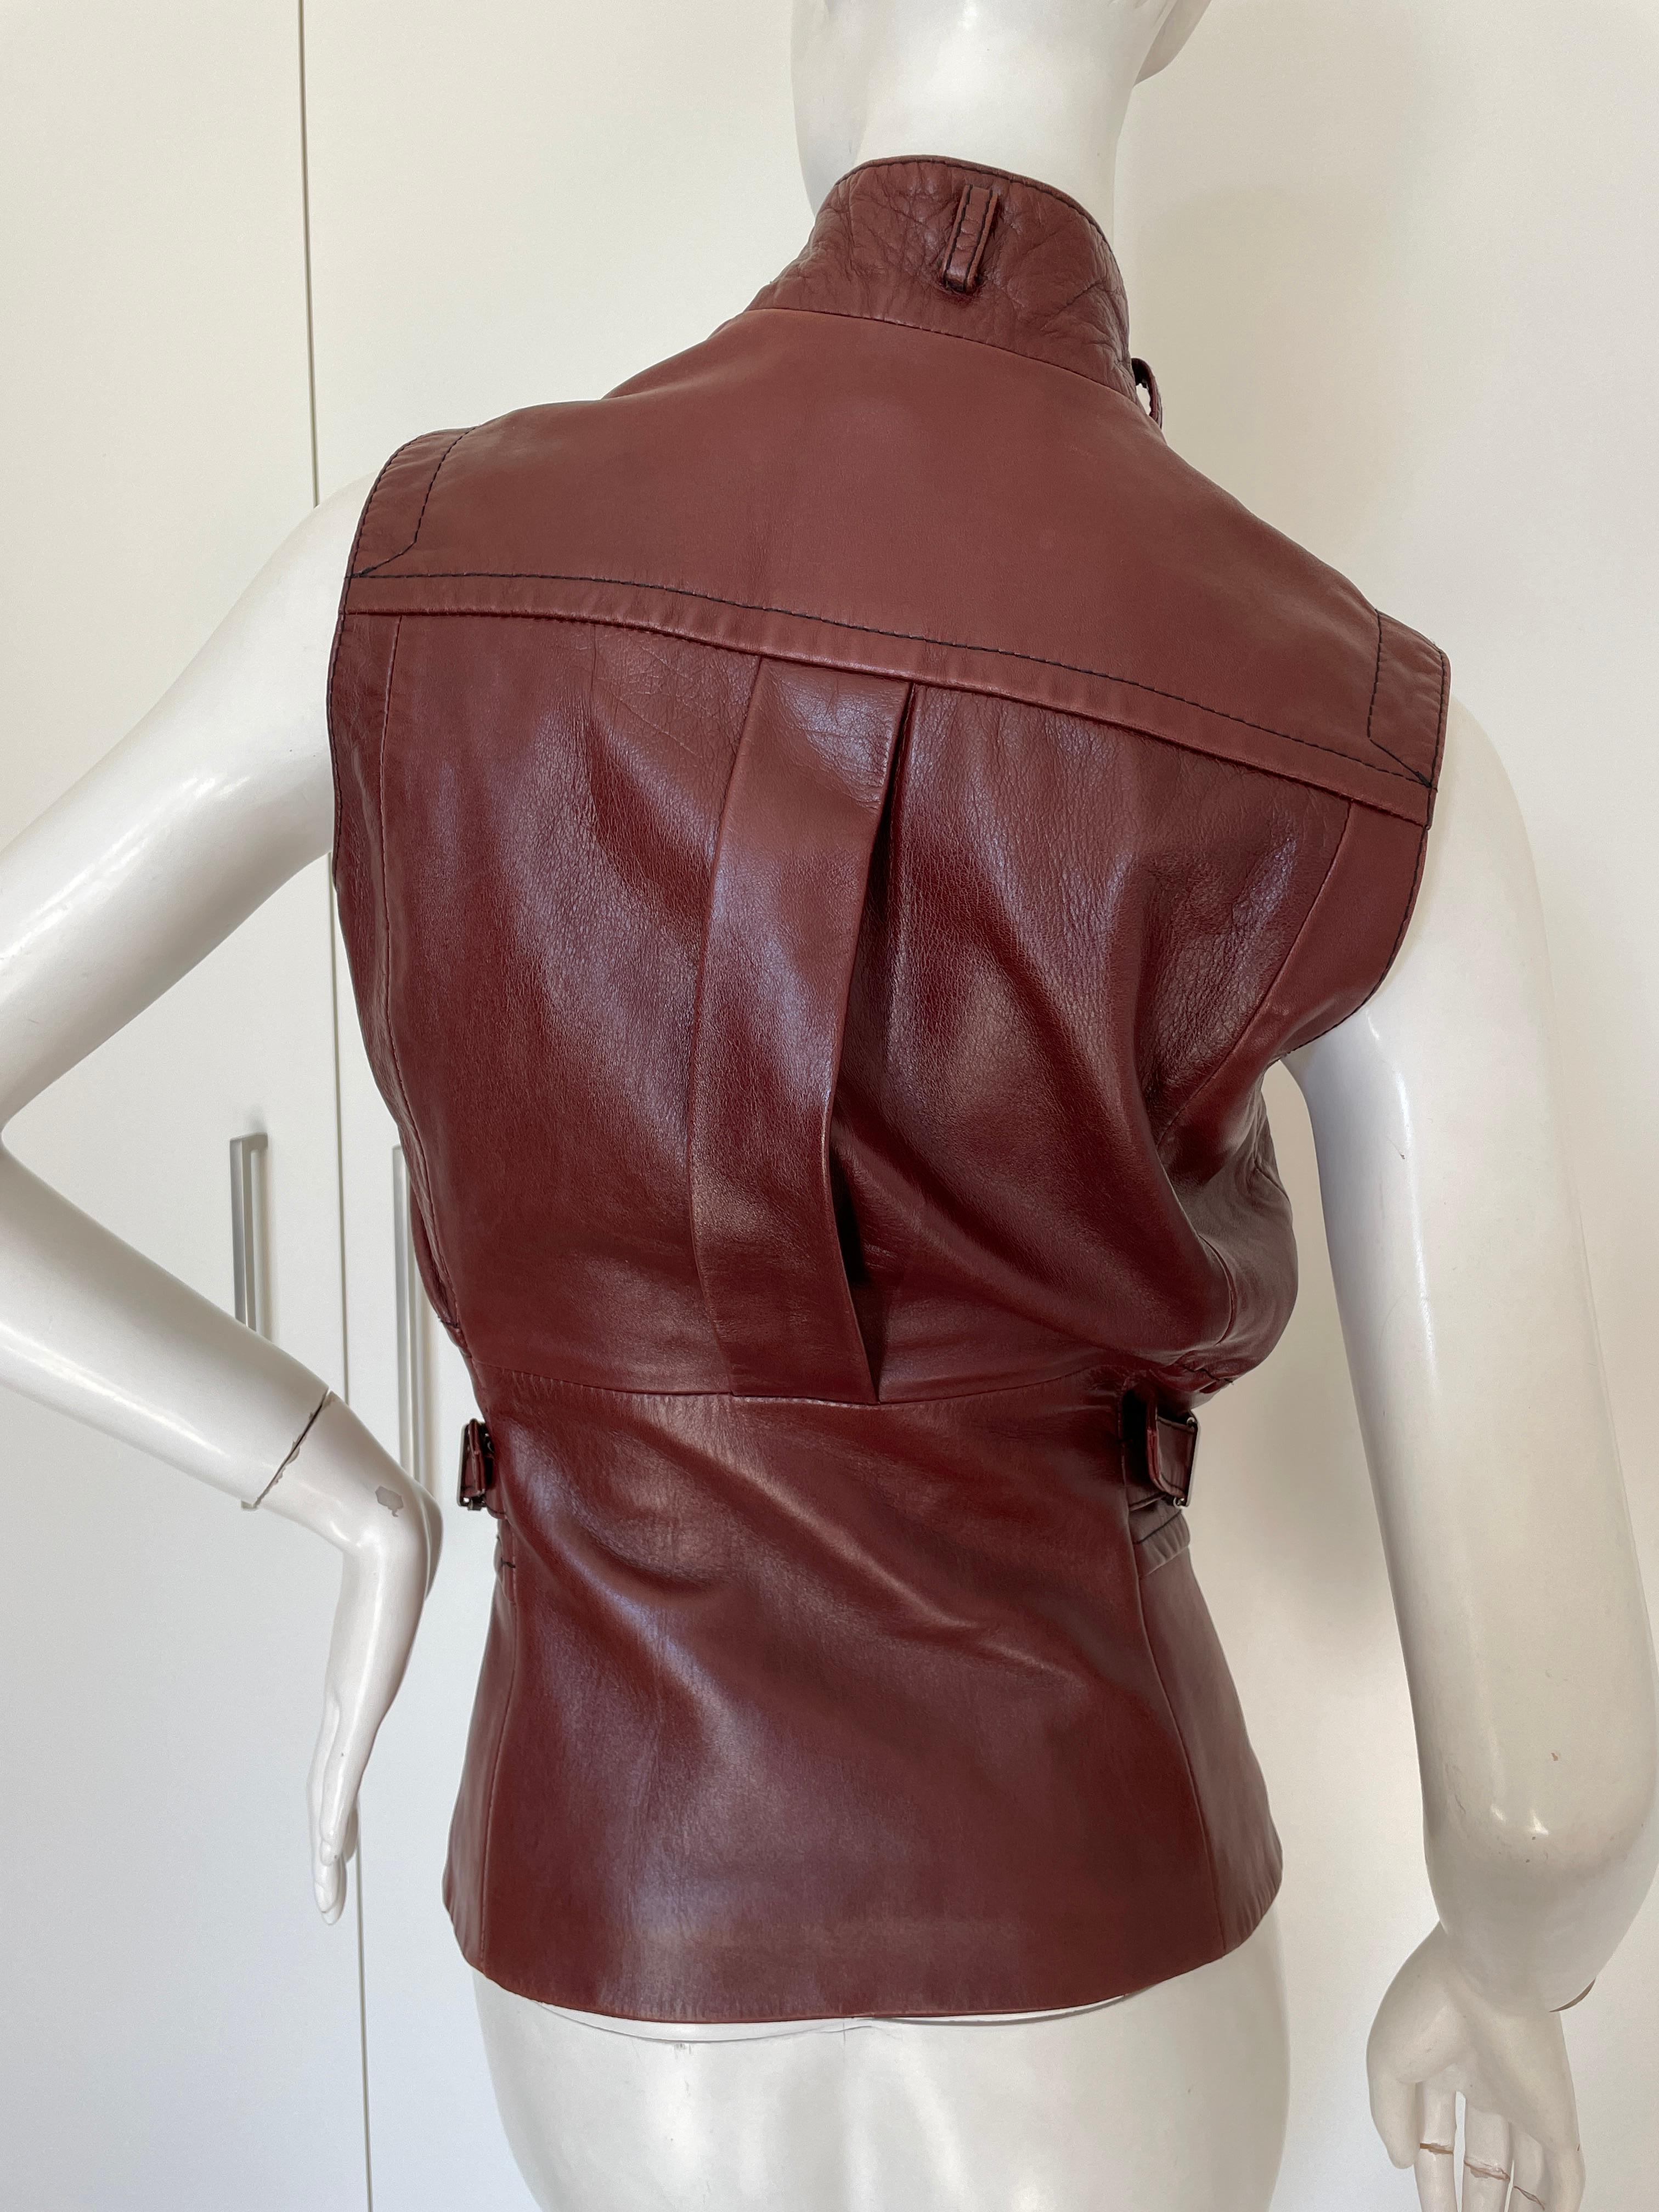  Gianfranco Ferre Vintage Lambskin Leather Moto Vest with Corset Lacing Details For Sale 3